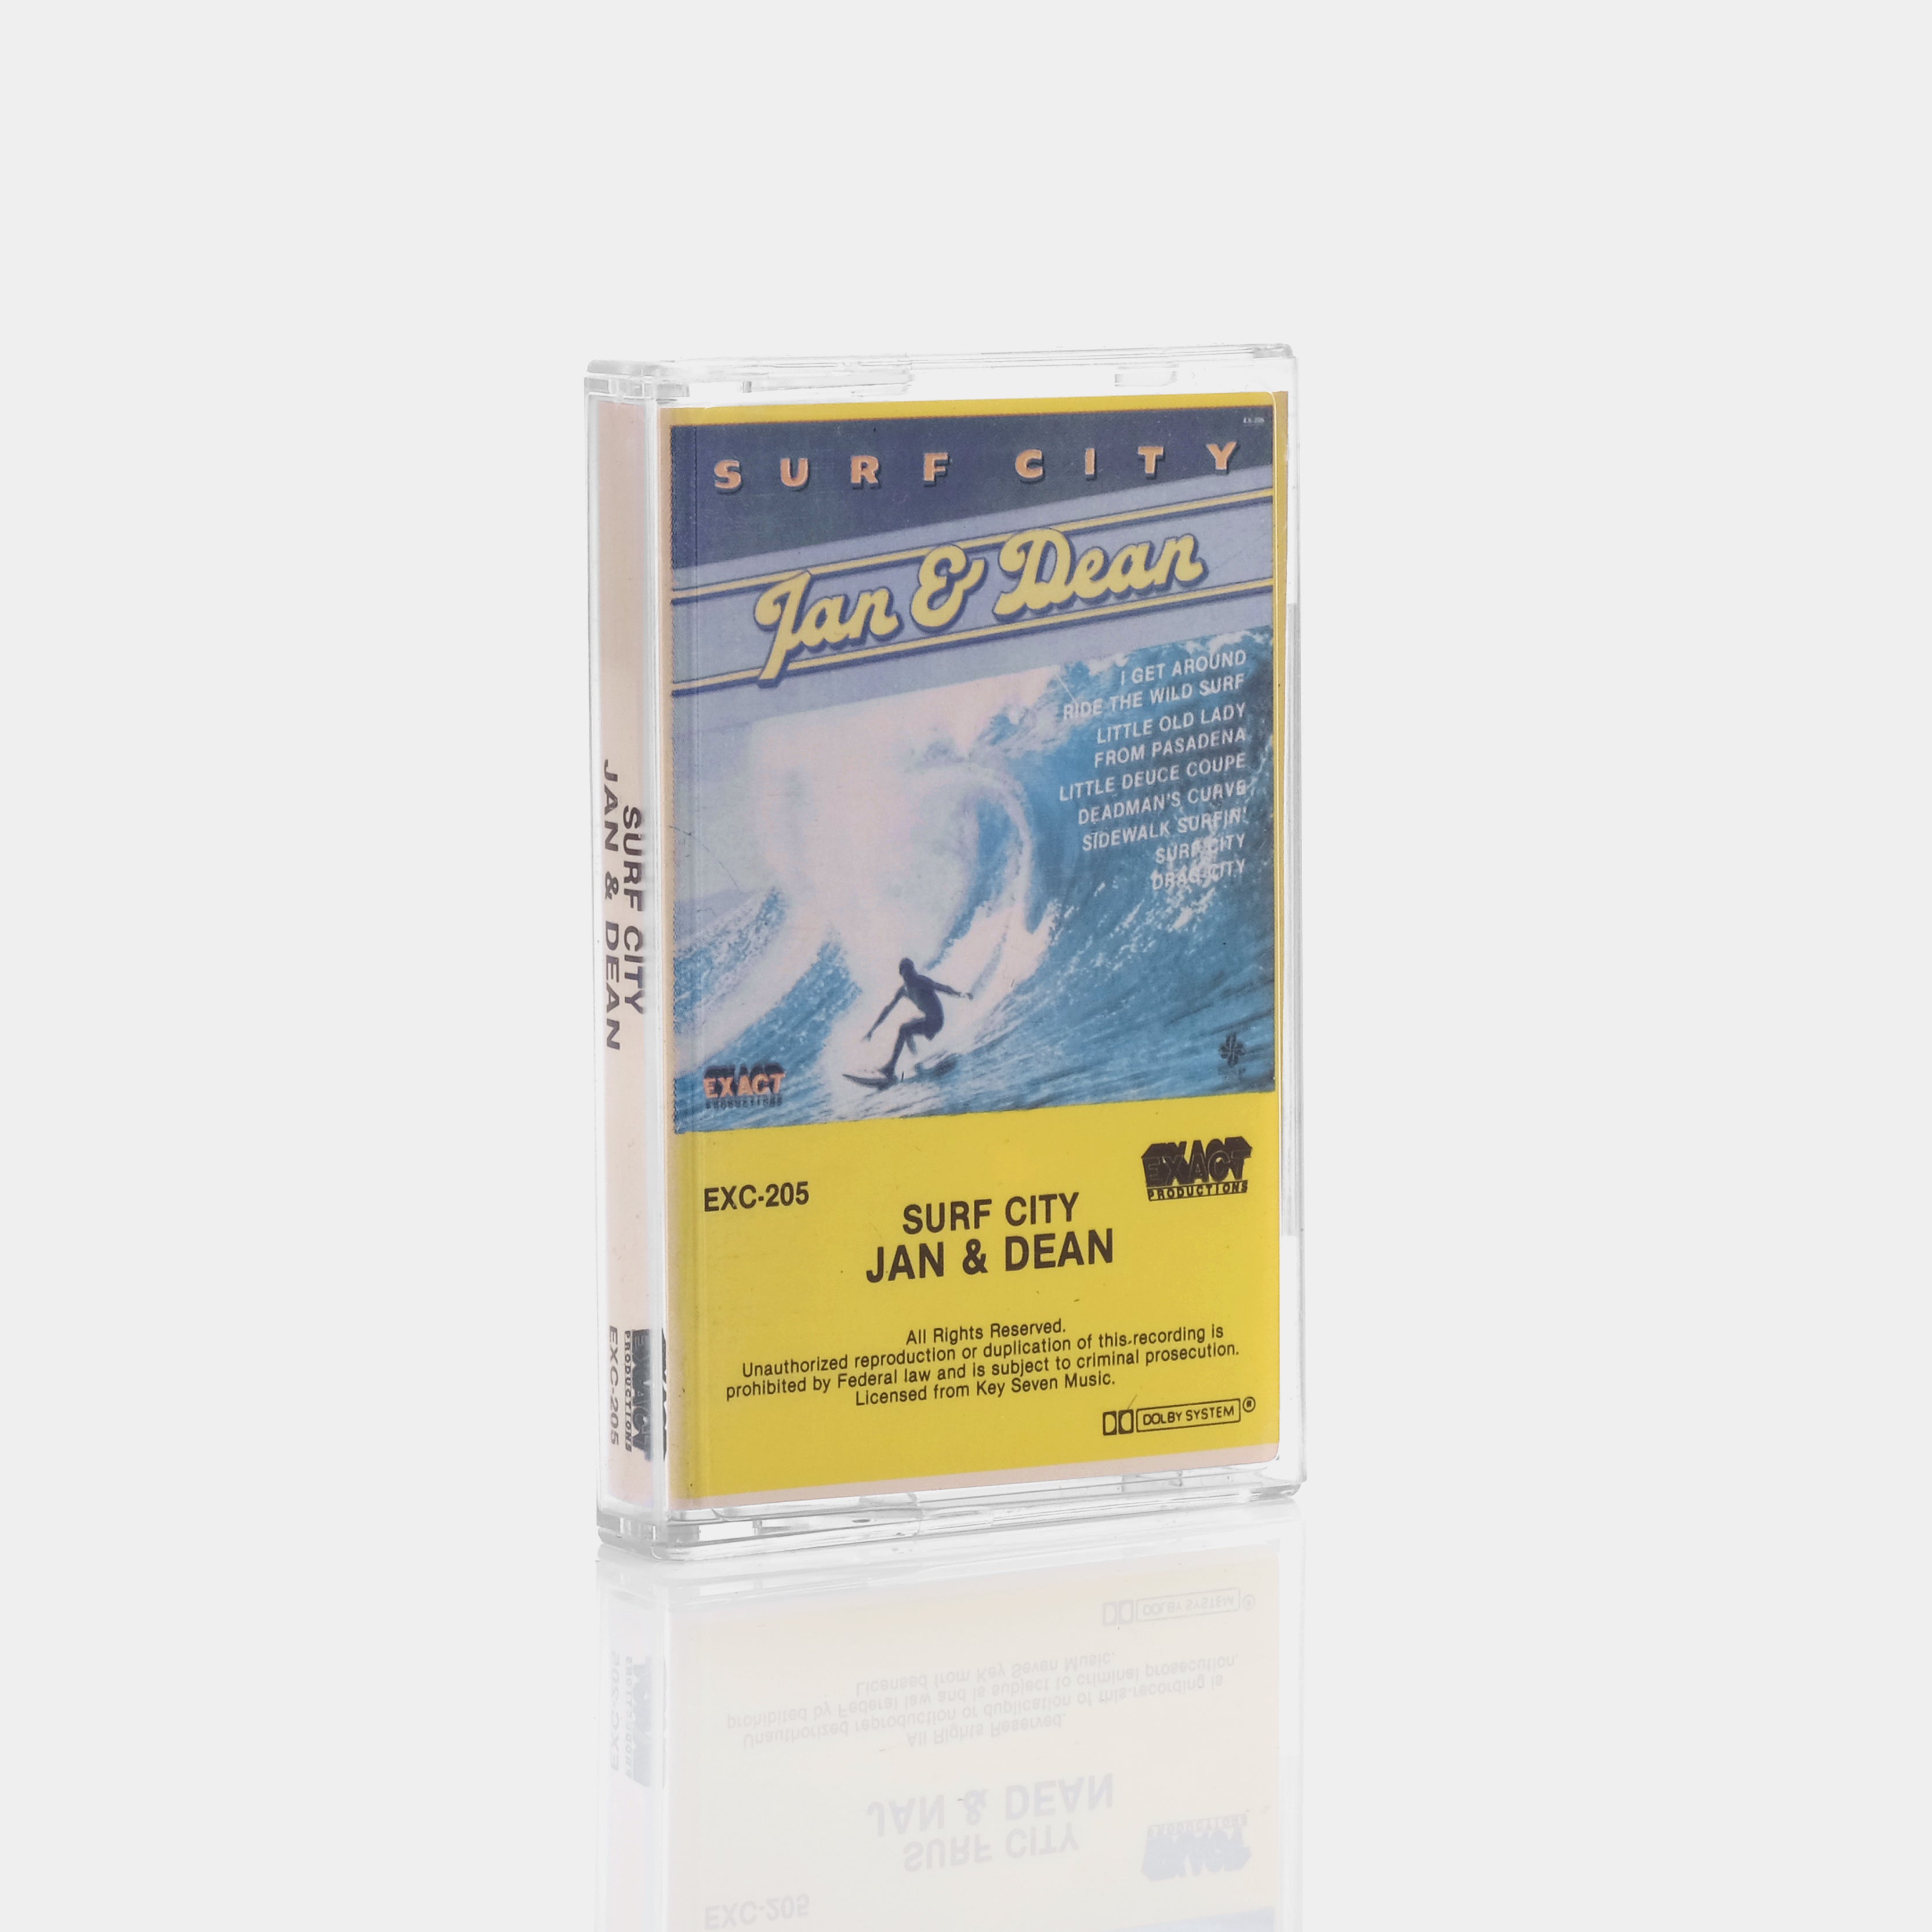 Surf City - Jan & Dean Cassette Tape